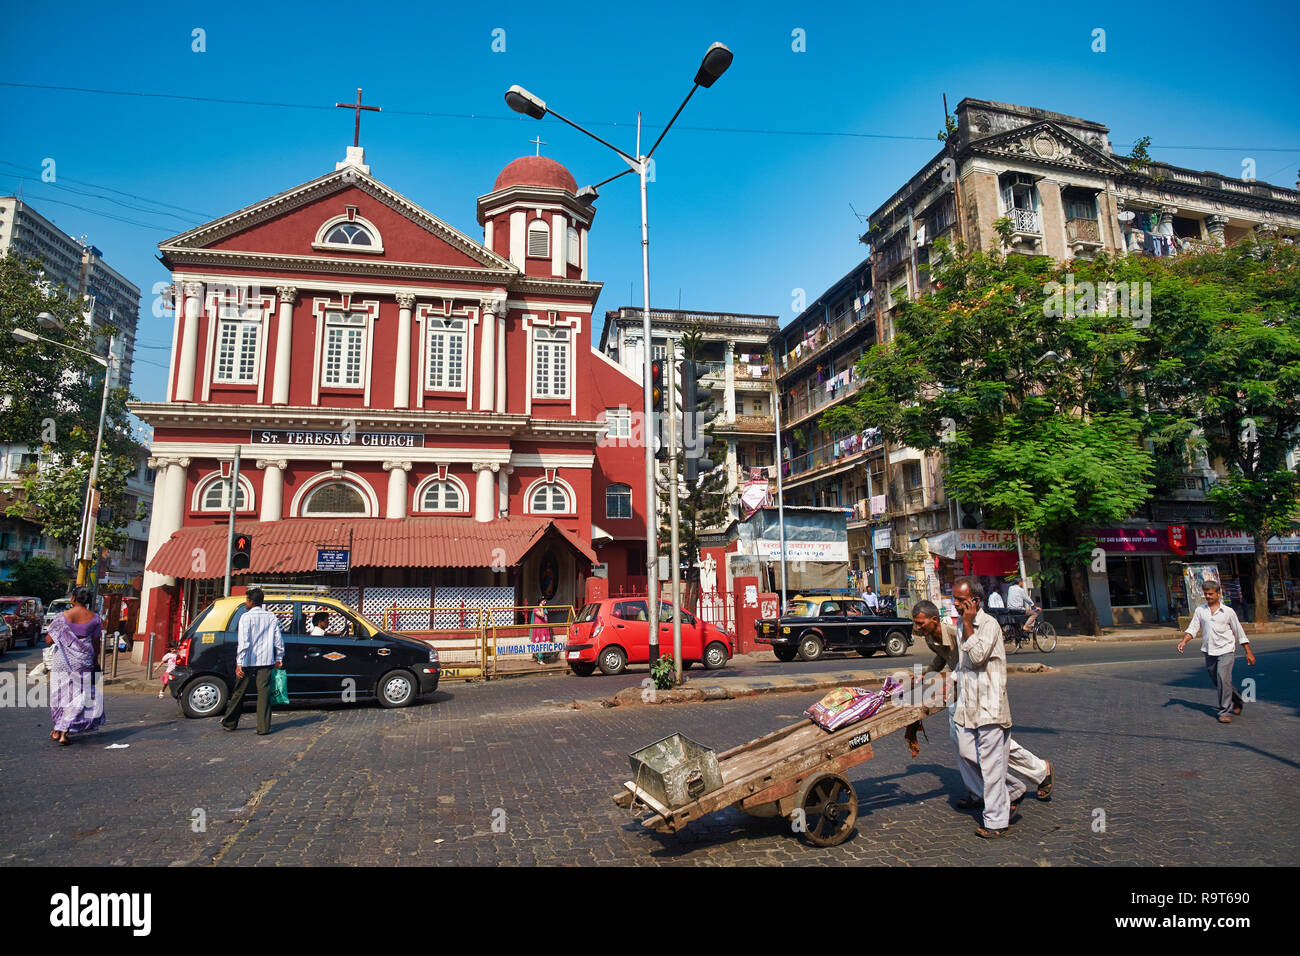 La chiesa rossa di Santa Teresa, chiamata anche Chiesa portoghese, in Charni Road, Girgaum (Girgaon), Mumbai, India Foto Stock